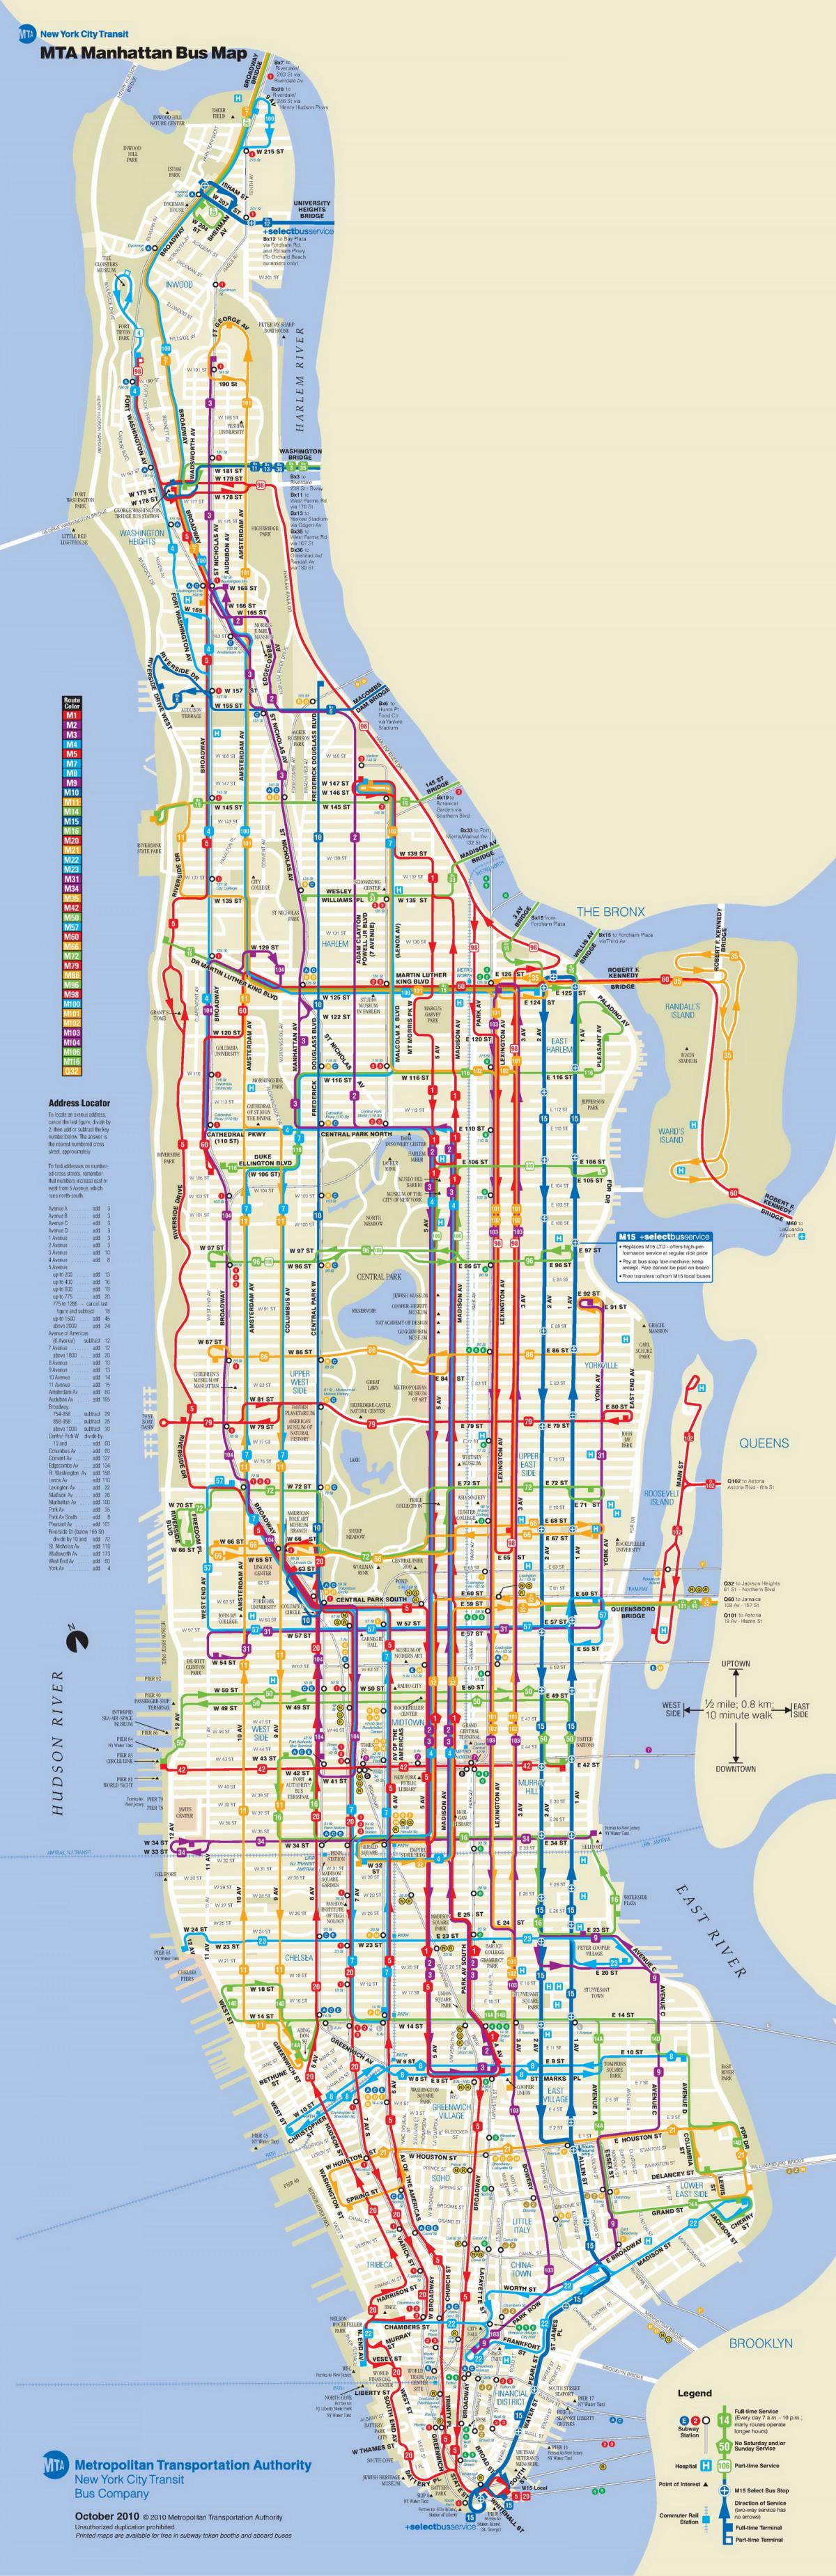 MTA bus peta manhattan